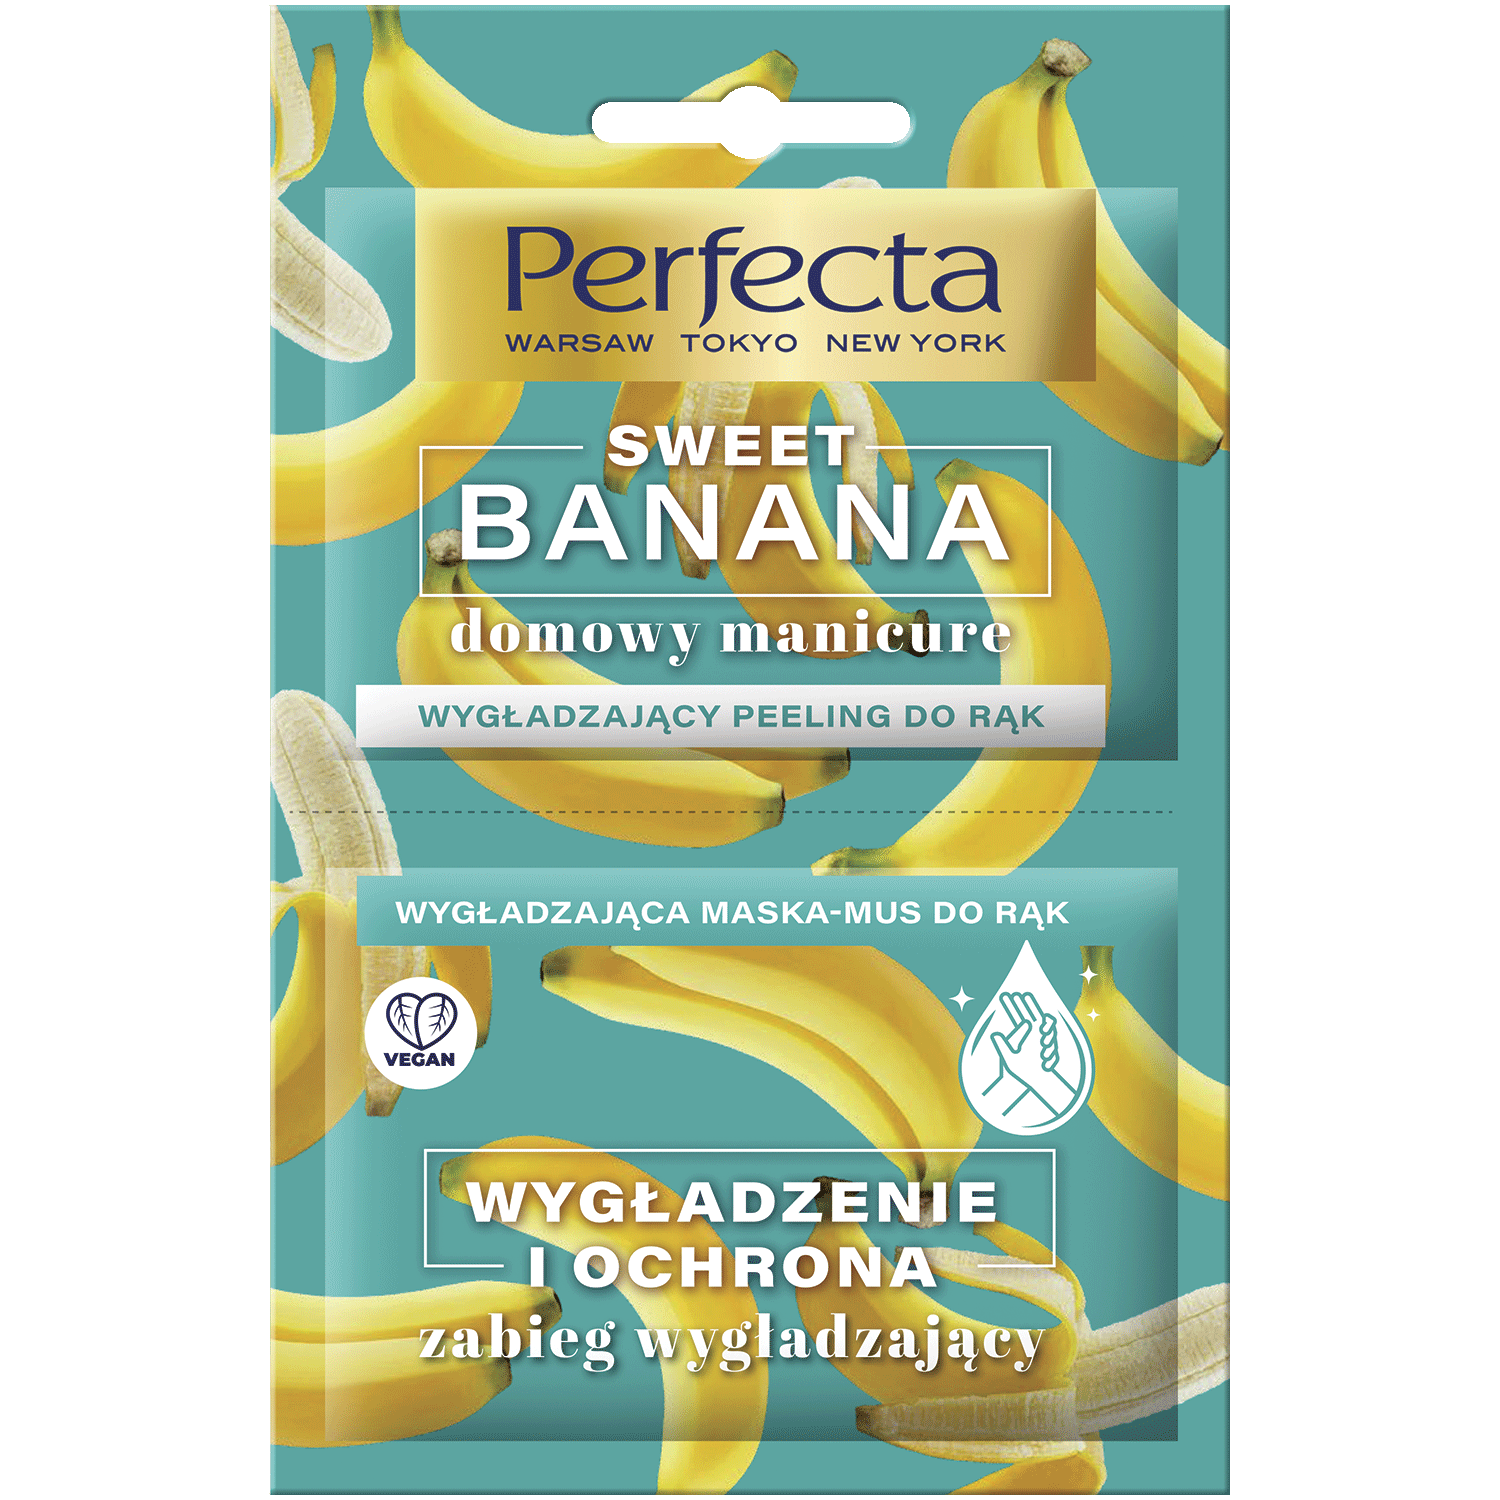 Perfecta Banana пилинг и маска для рук, 12 мл цена и фото